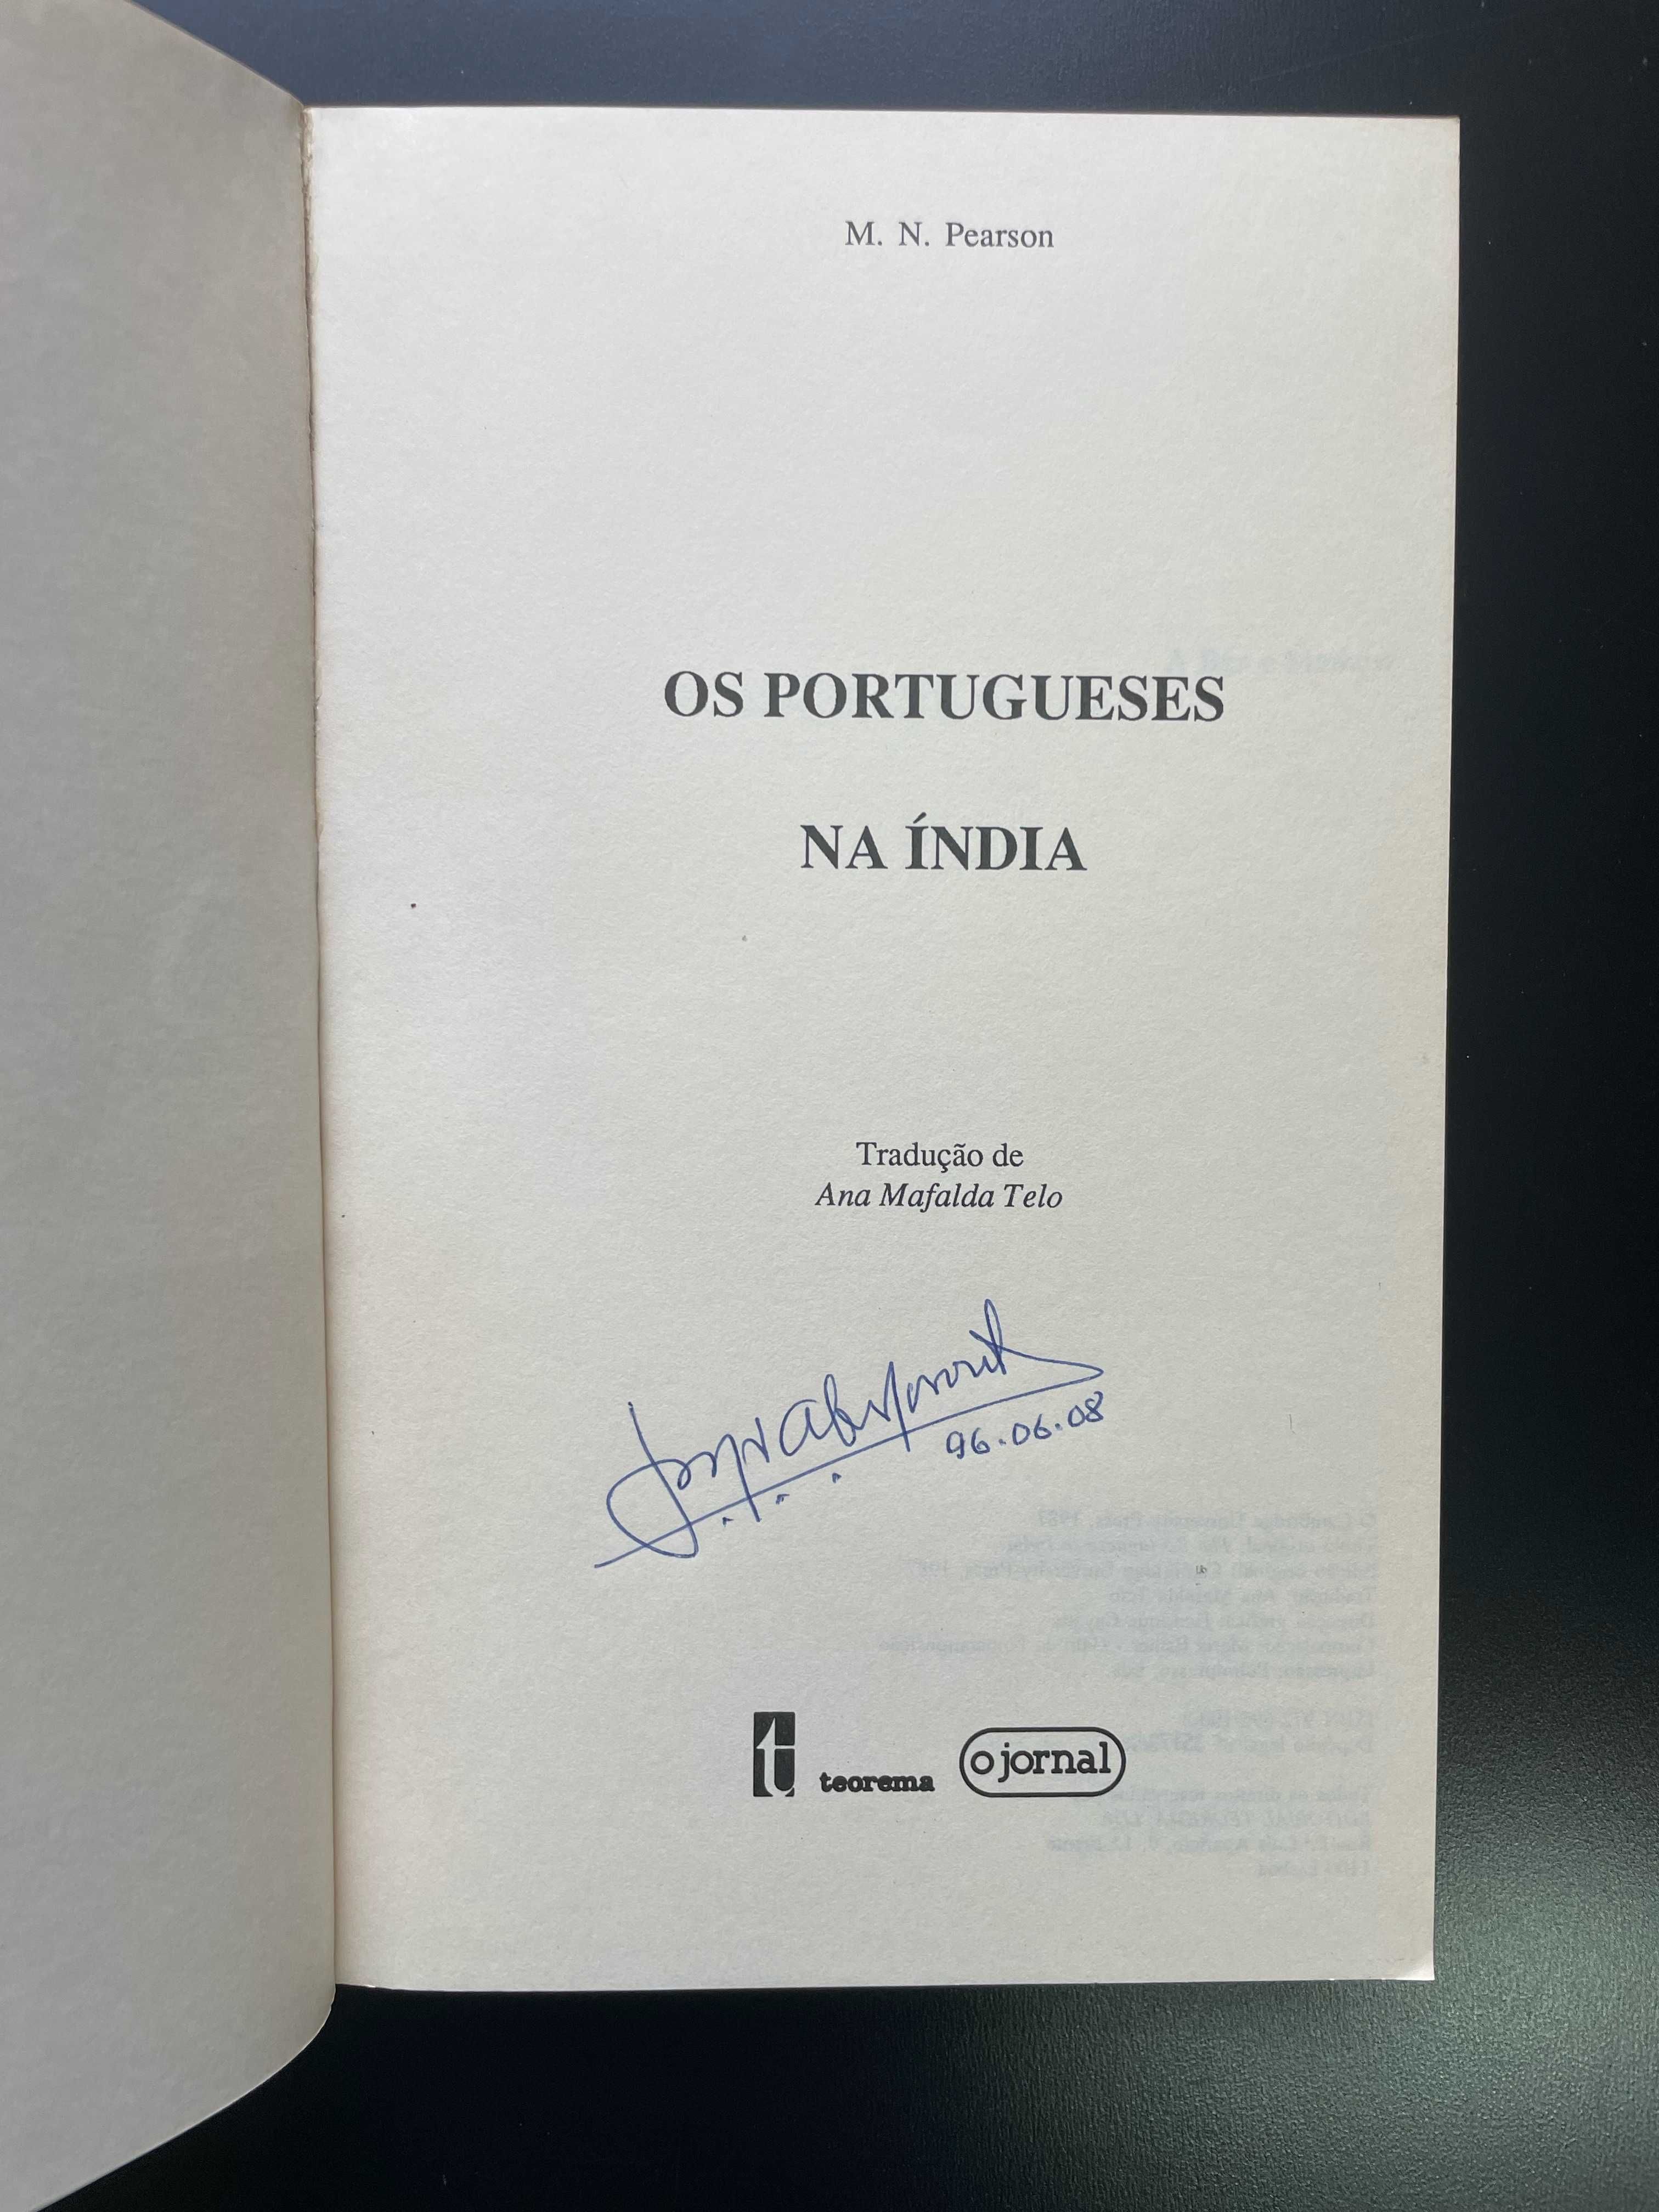 Os Portugueses na Índia, de M. N. Pearson